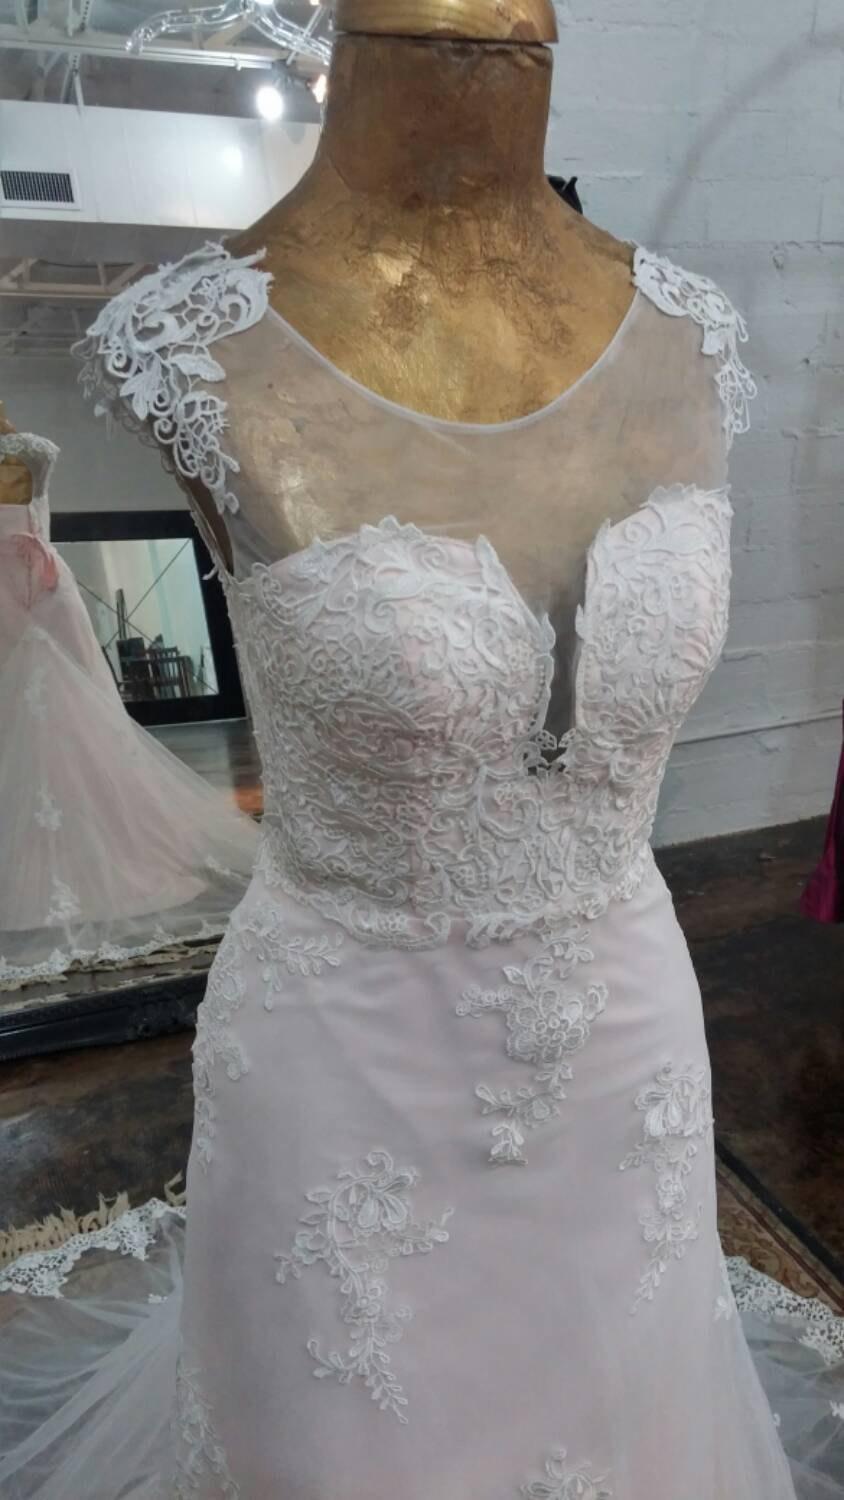 زفاف - Blush and Light Ivory Lace Wedding Dress, Lace Wedding Dress, Blush Wedding Dress, Lace Applique Wedding Dress, Unique Wedding Dress